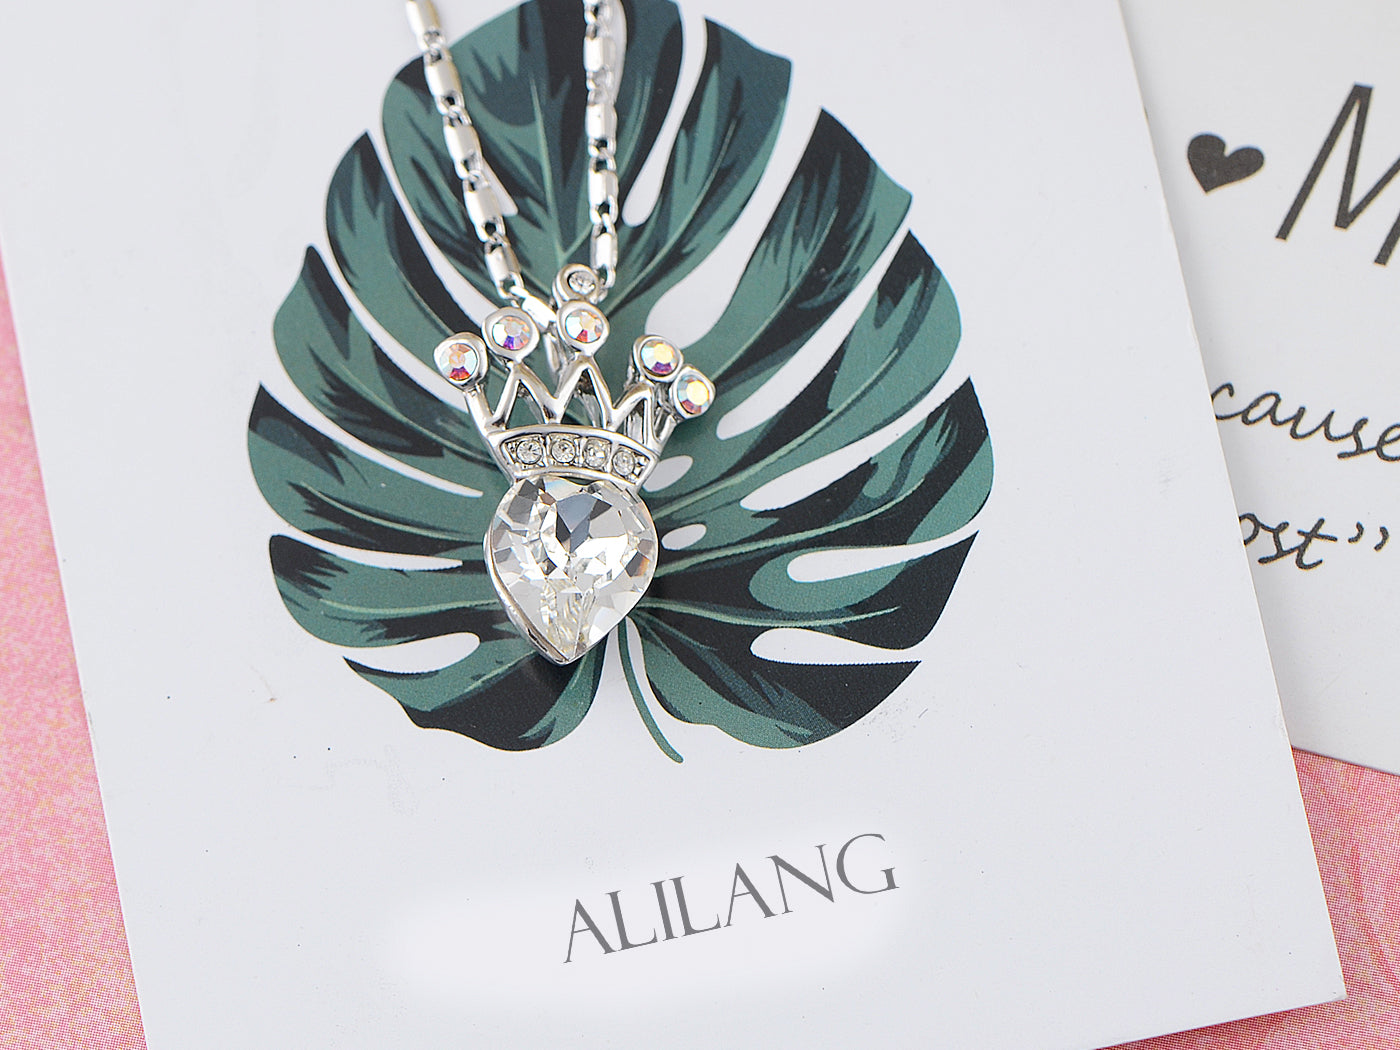 Swarovski Crystal Elements Petite Heart Shaped Royalty Crown Pendant Necklace